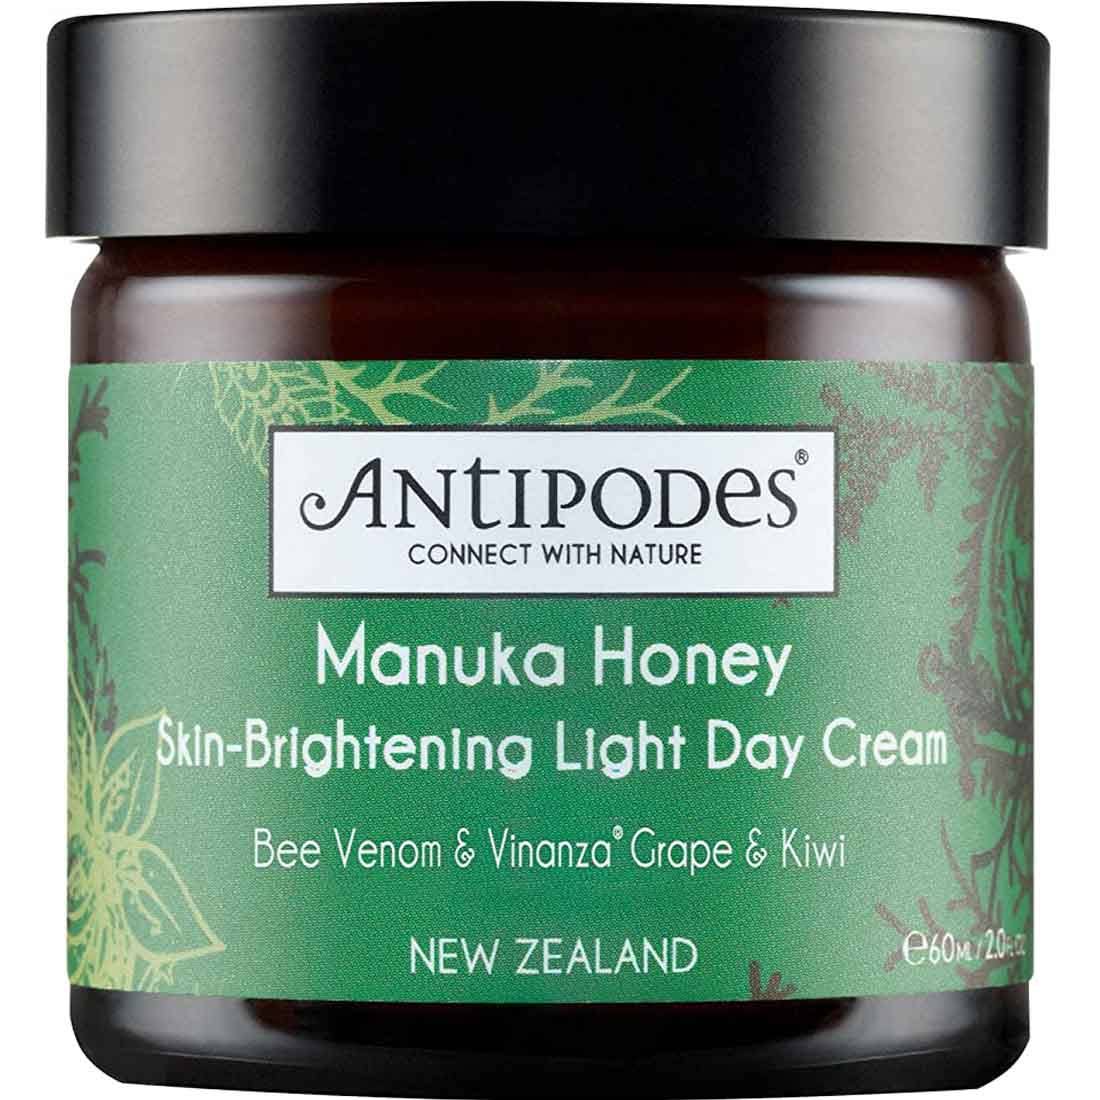 Antipodes Manuka Honey Light Day Cream